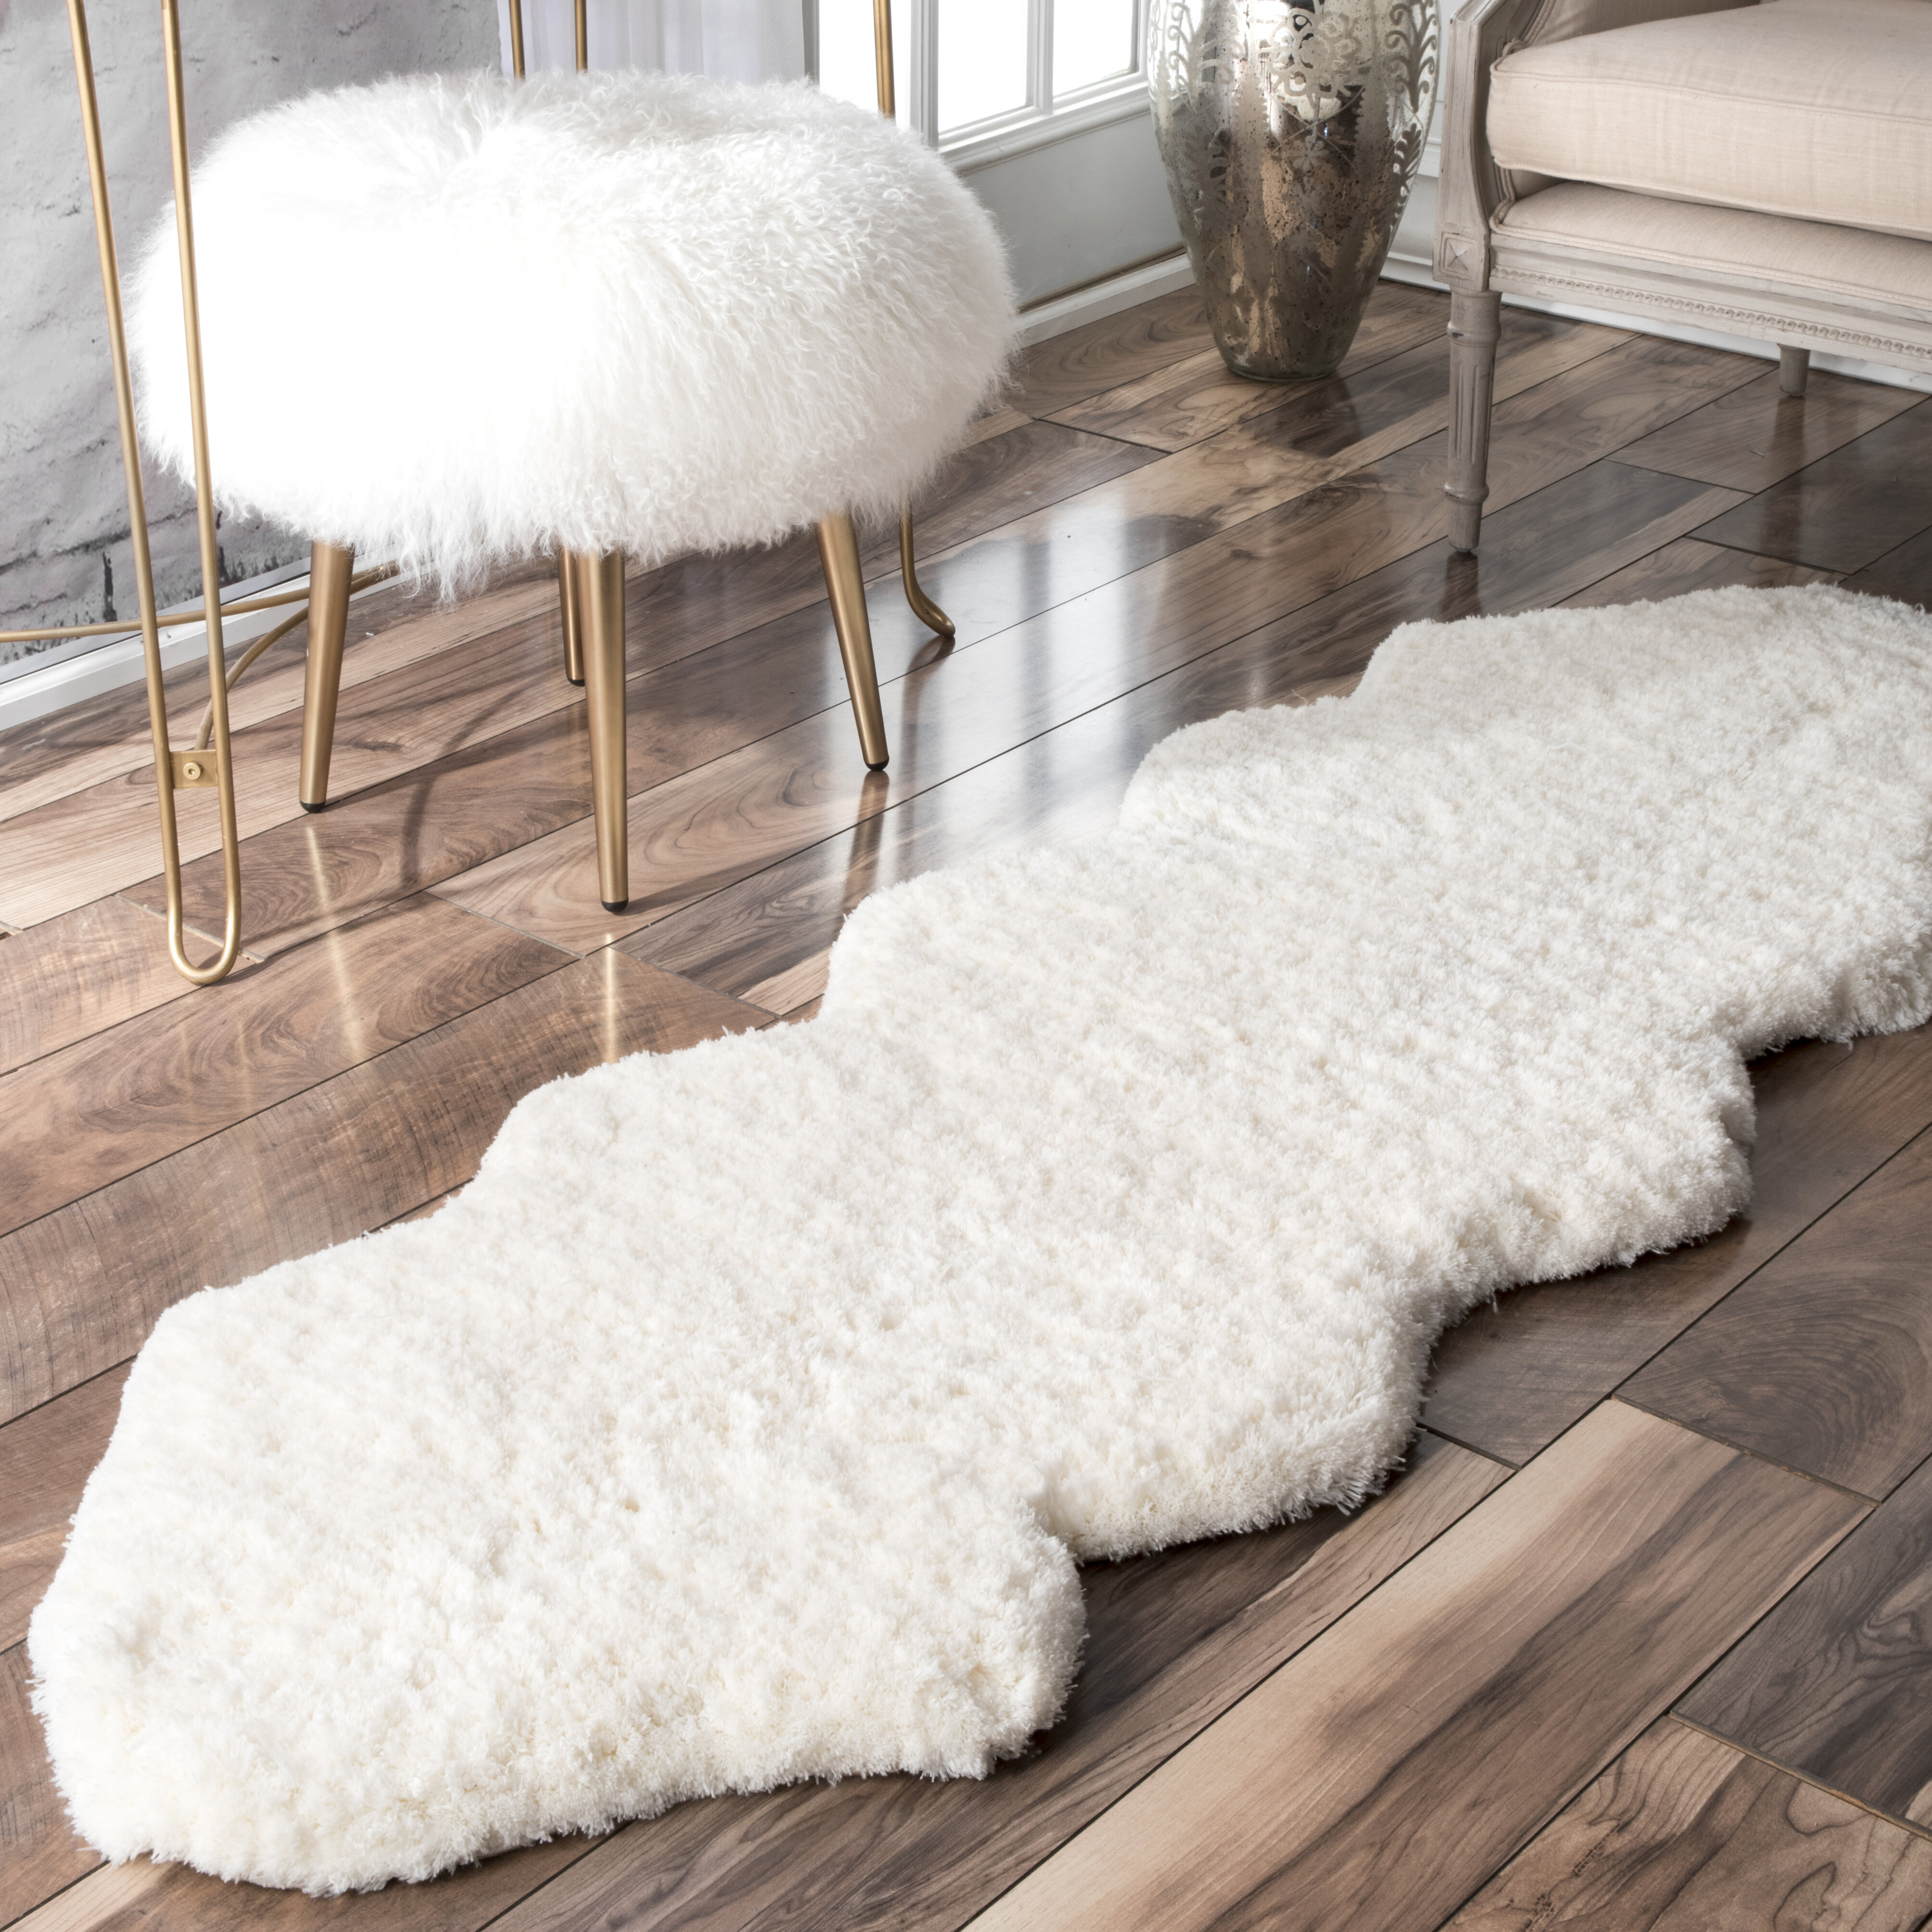 Super Soft Fluffy Hand Made Ivory/White Faux Sheepskin Area Rug Carpet 